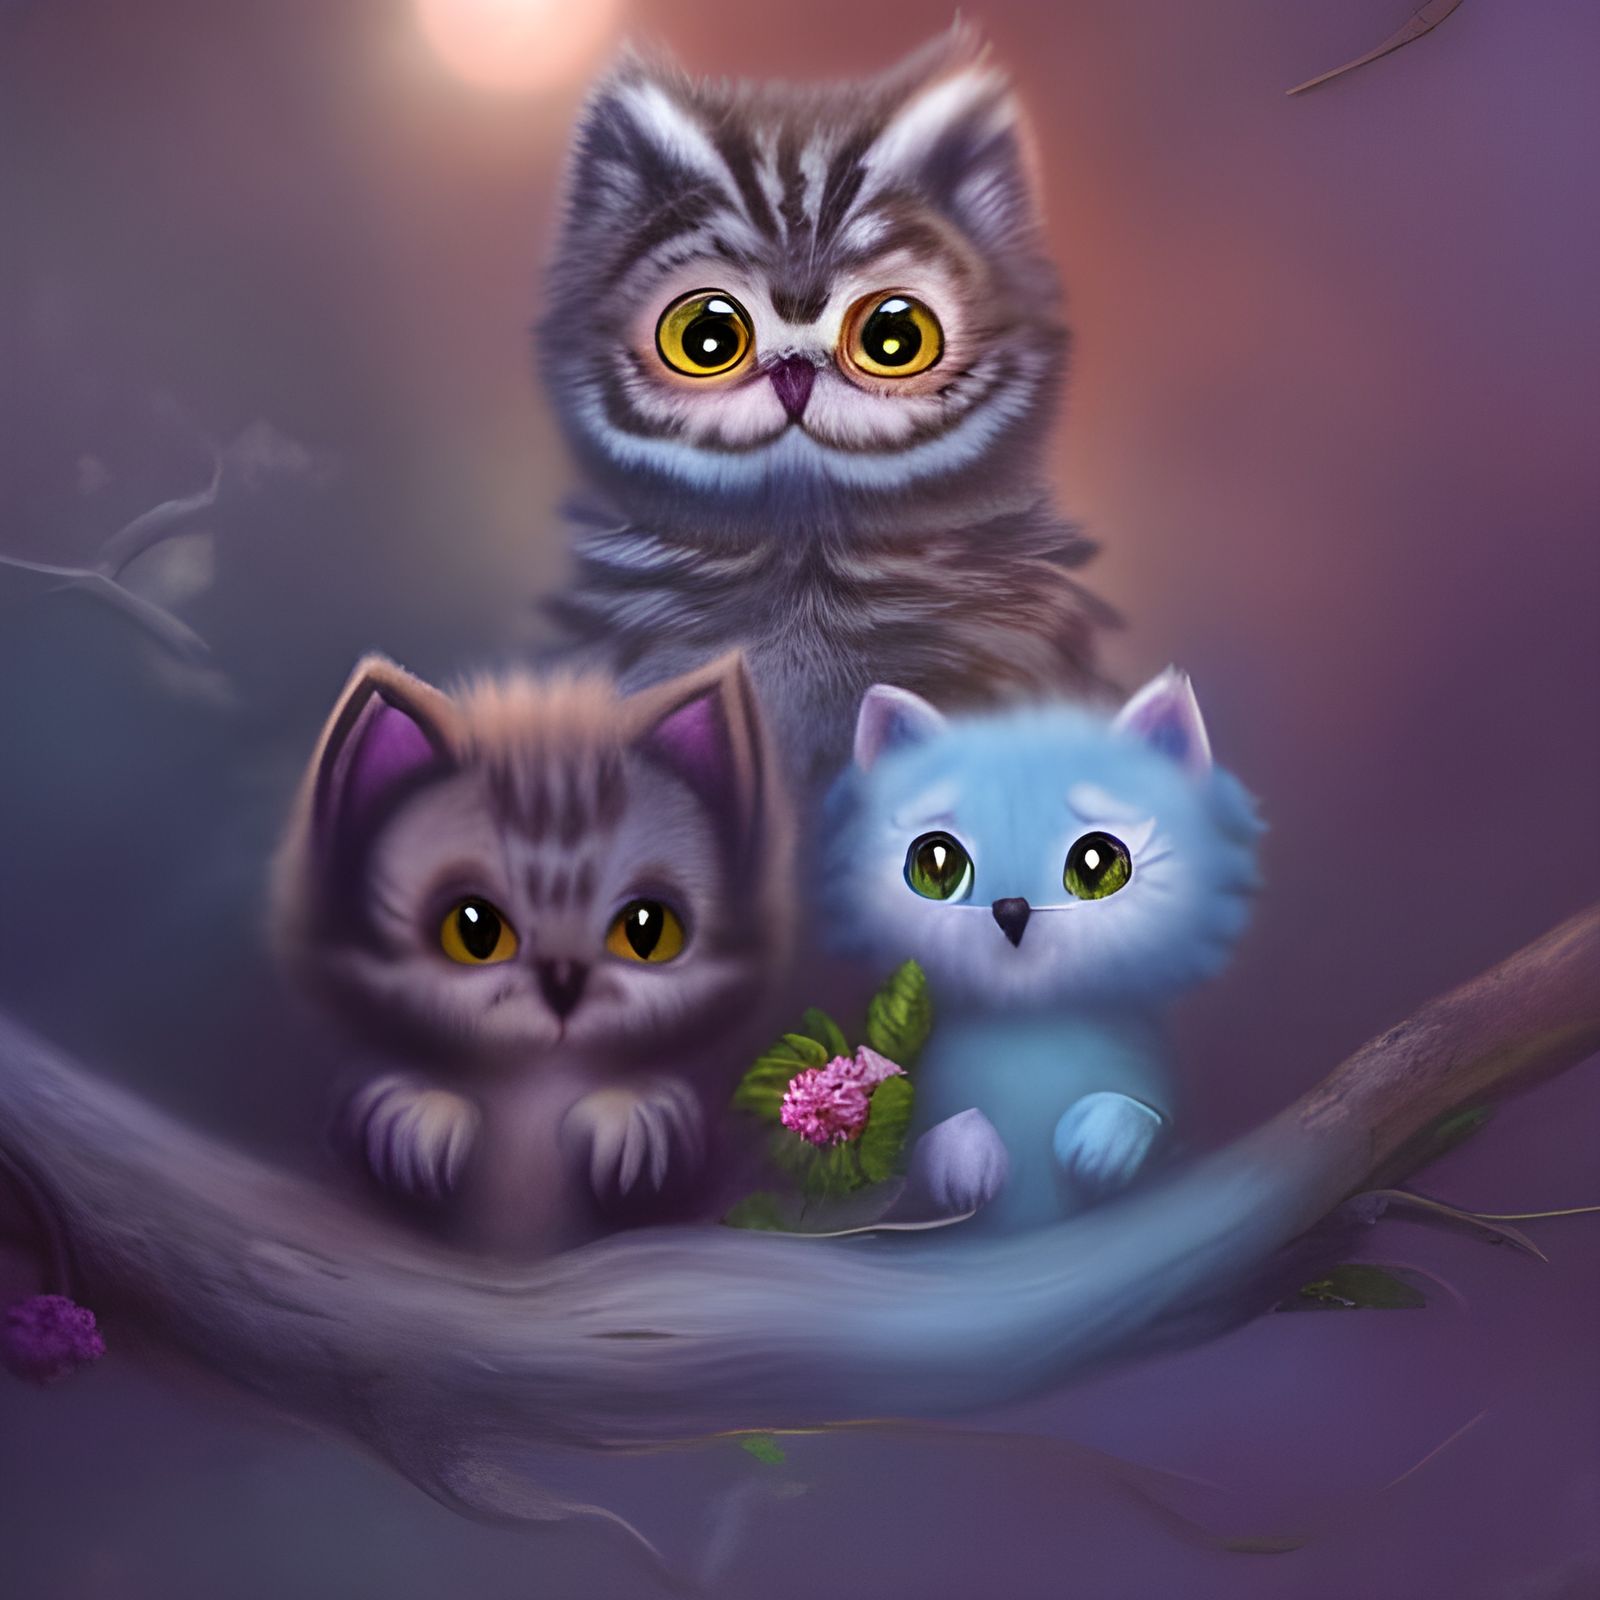 Adorable Owlkitty family